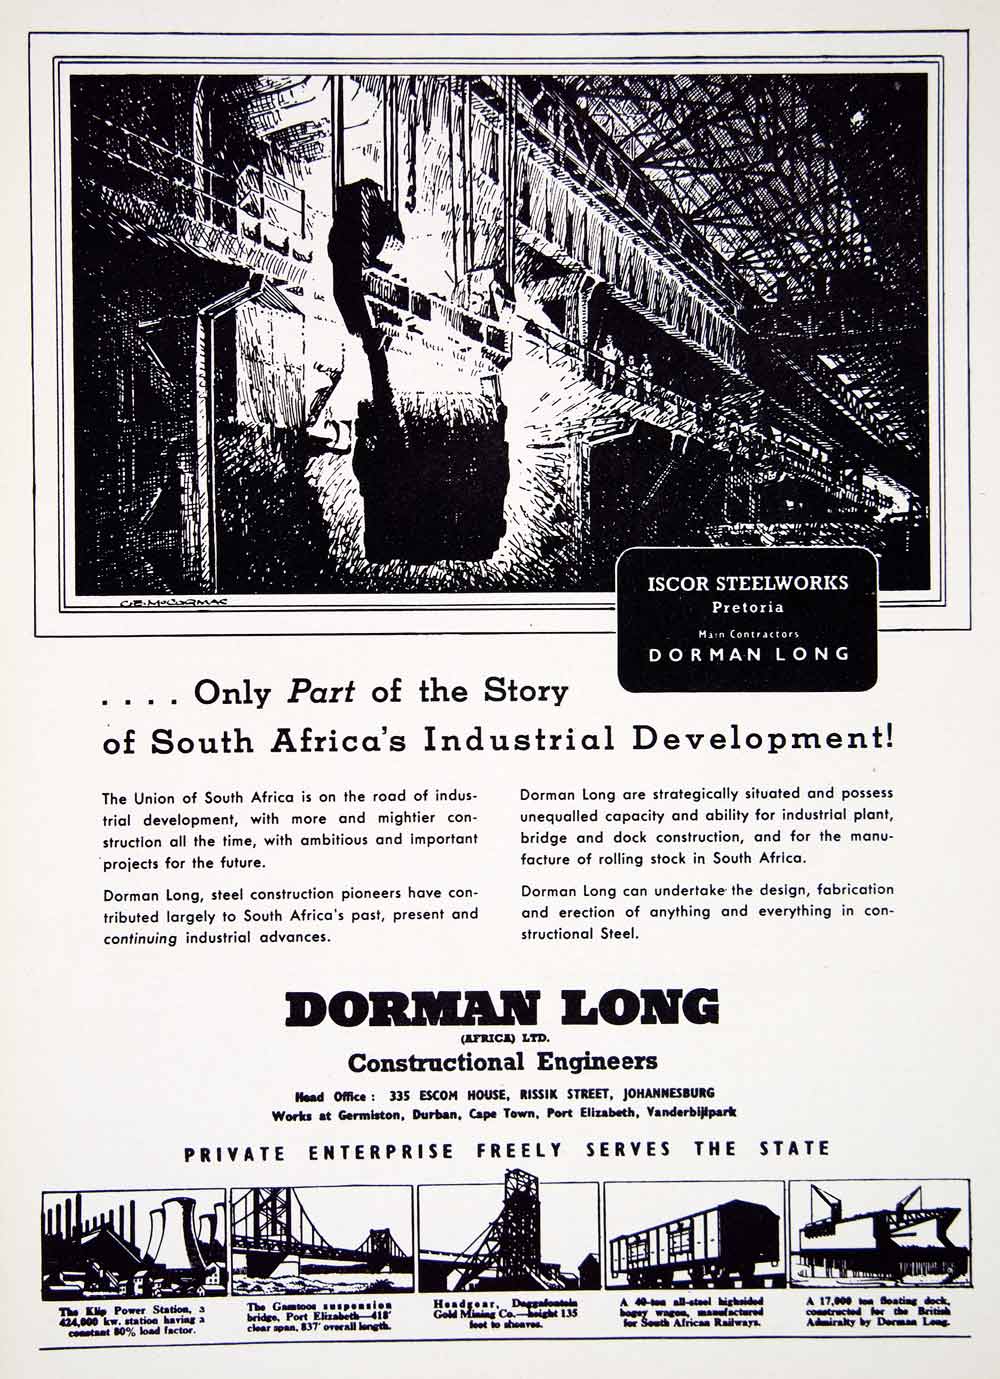 1949 Ad Dorman Long Construction Engineer Iscor Steelworks Pretoria South XGTC8